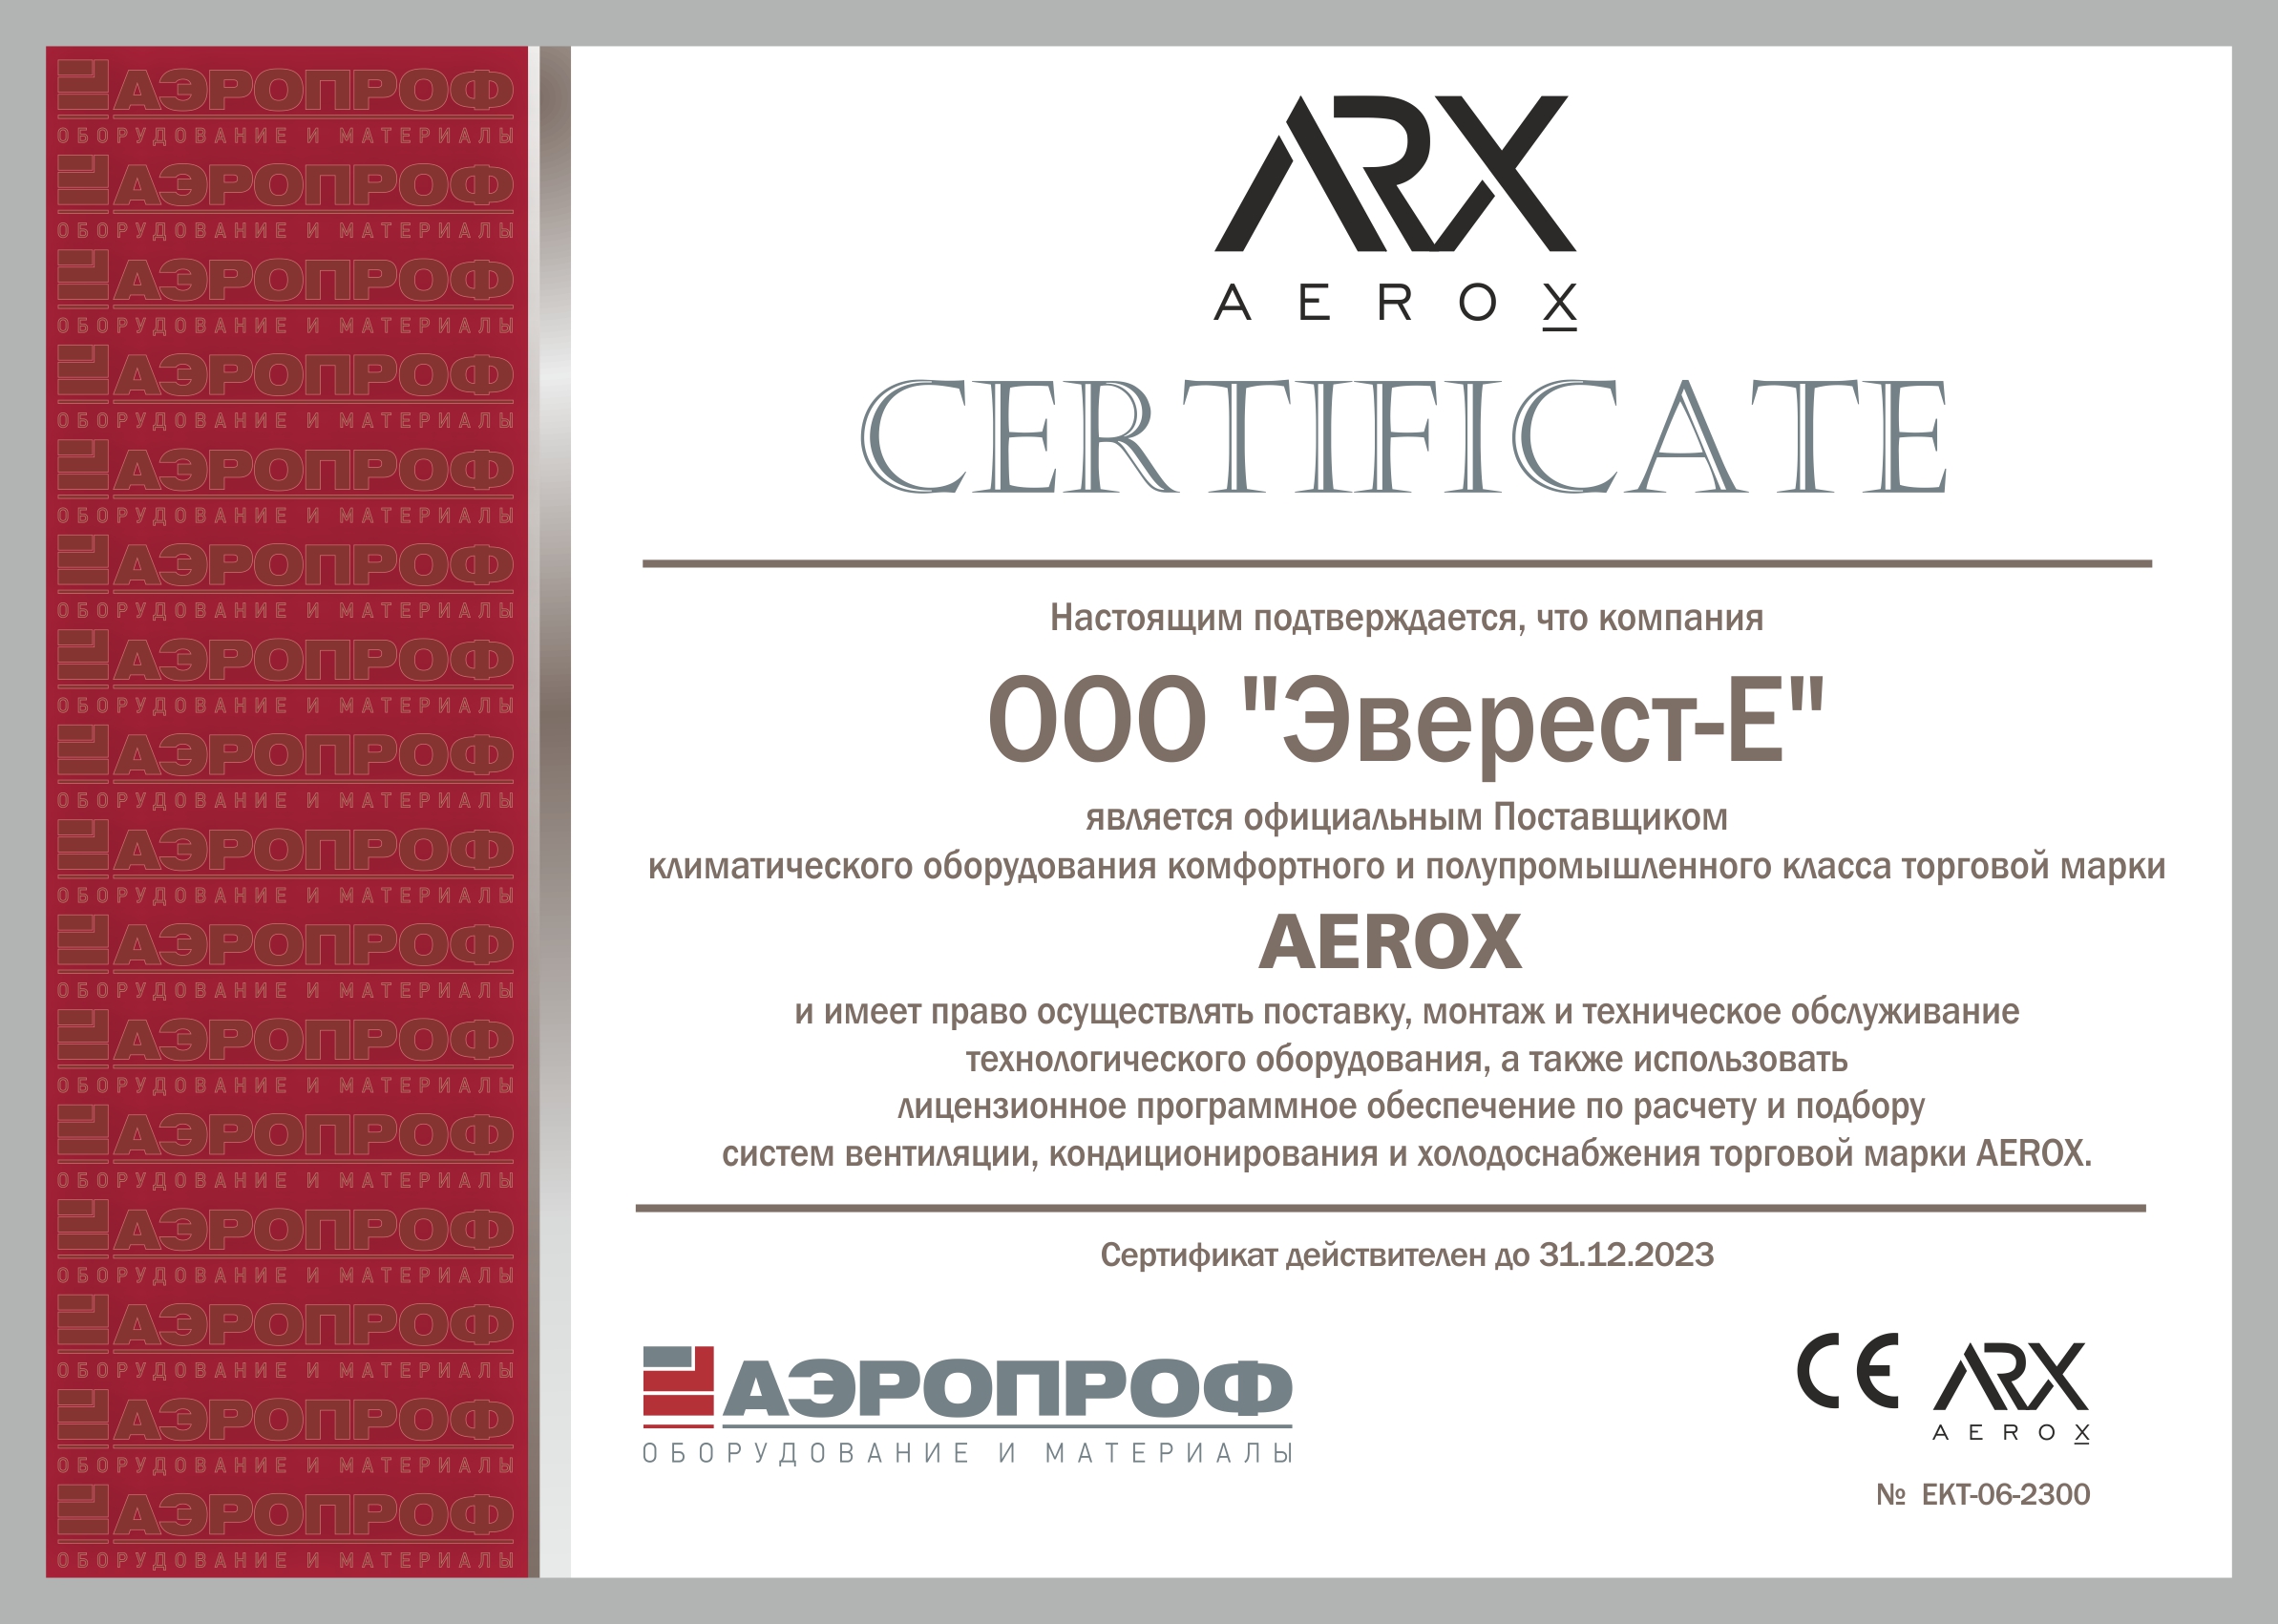 sert23-everest-arx Kondicioner Aero ARS-II-18IHN21D6-01/ARS-II-18OHN21D6-01 kypit v Ekaterinbyrge v internet-magazine KlimatMarket96.ry Сертификат официального дилера